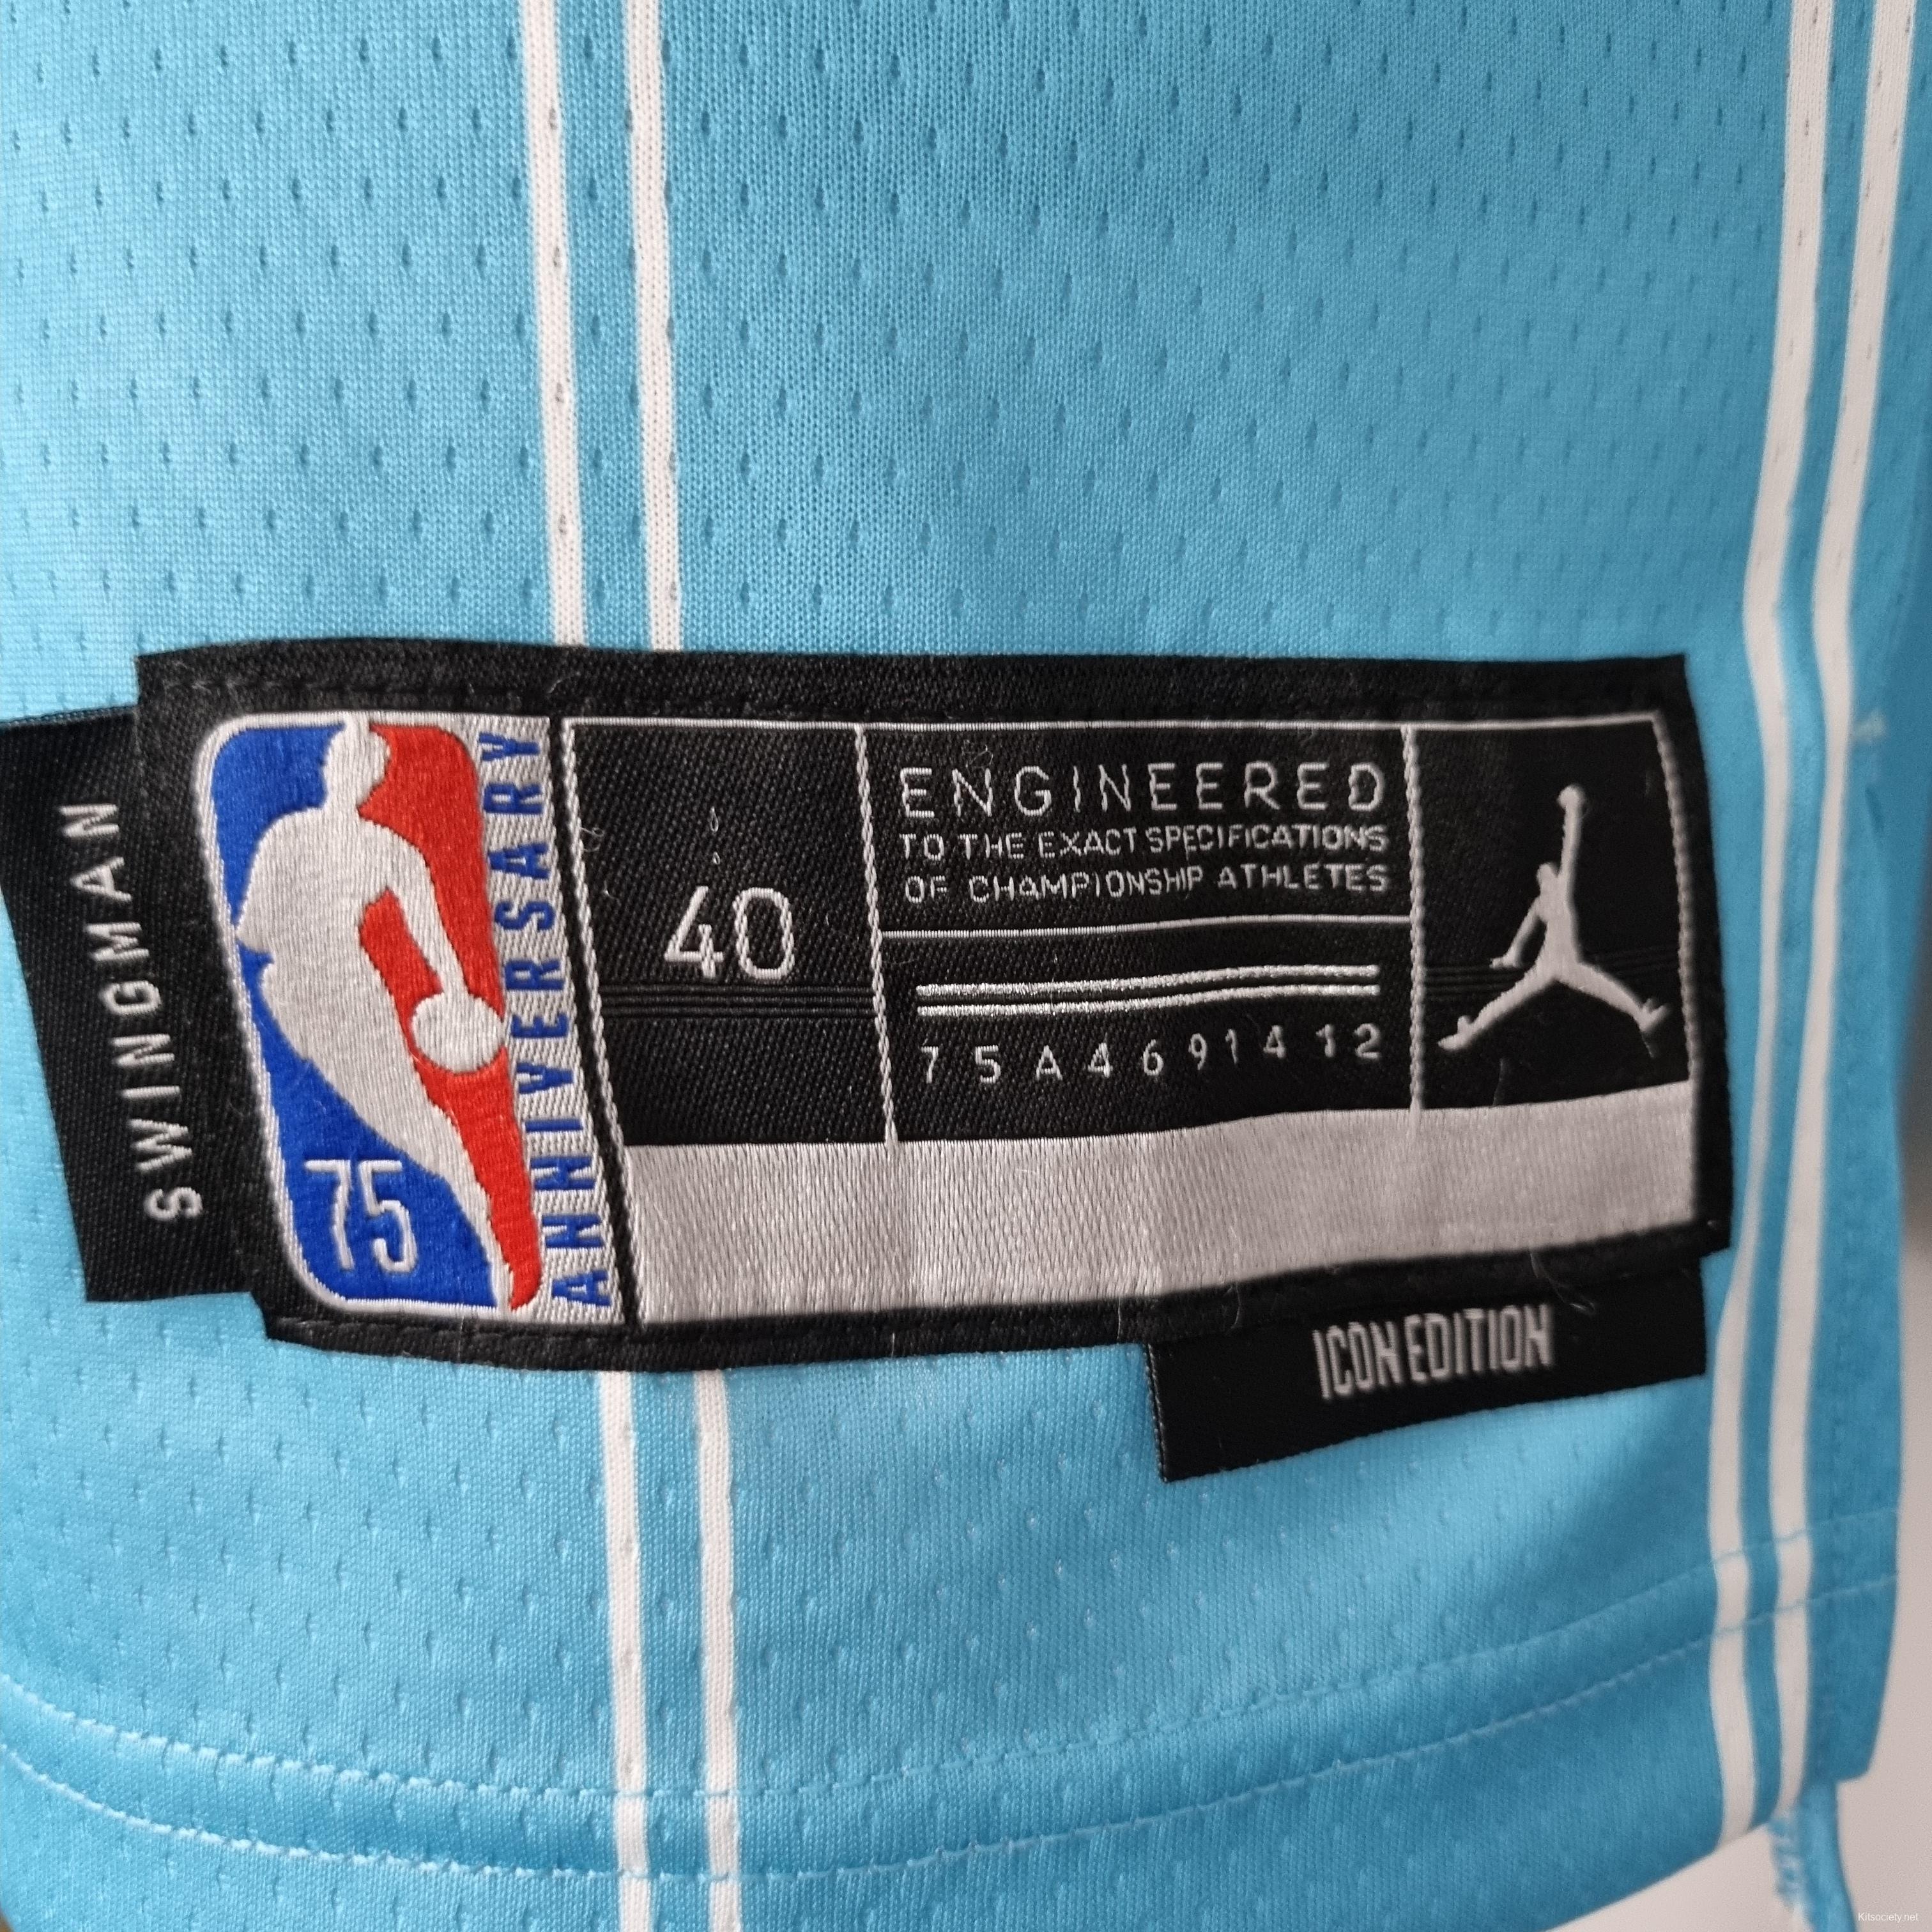 75th Anniversary Randle #30 New York Knicks Blue NBA Jersey - Kitsociety